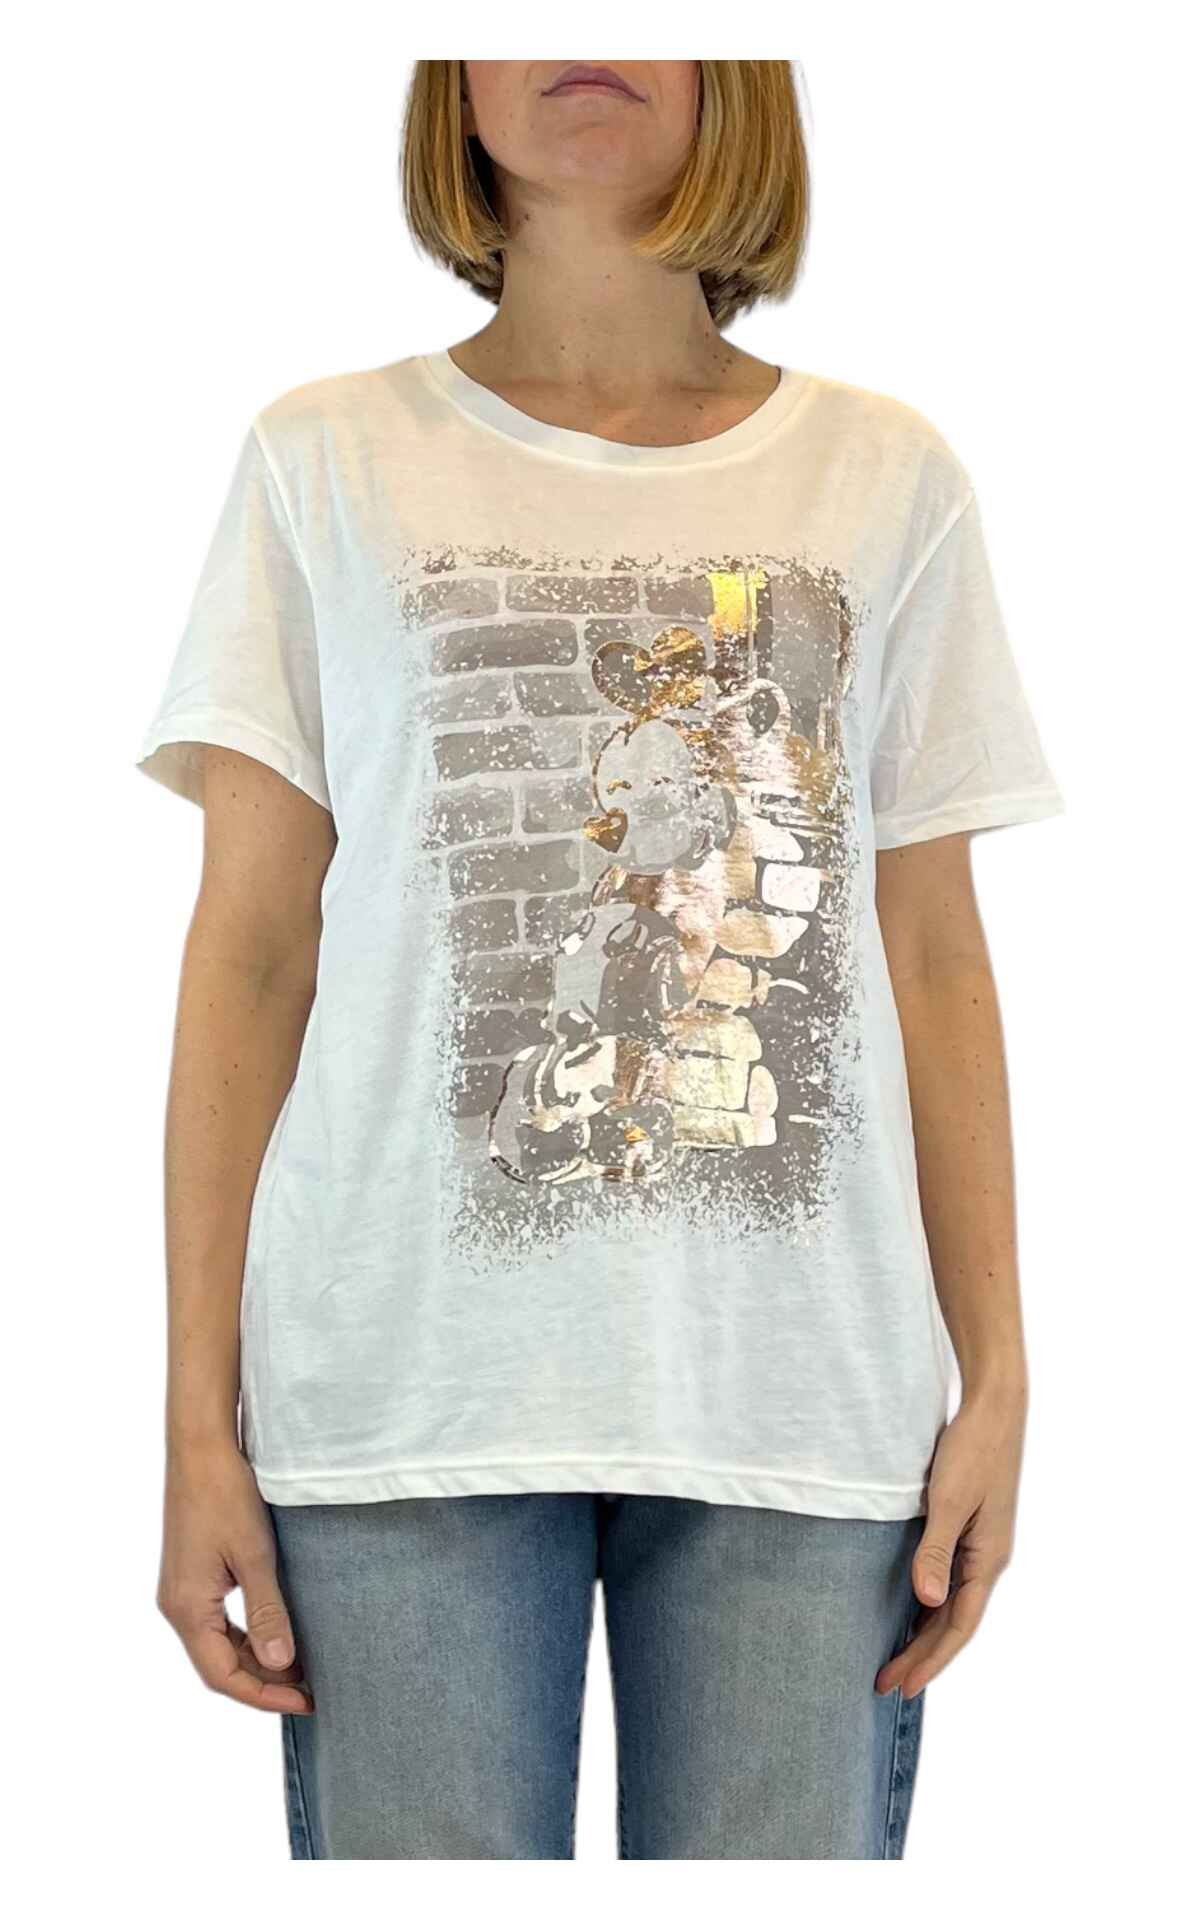 Off-on - T-shirt stampa topolino - oro